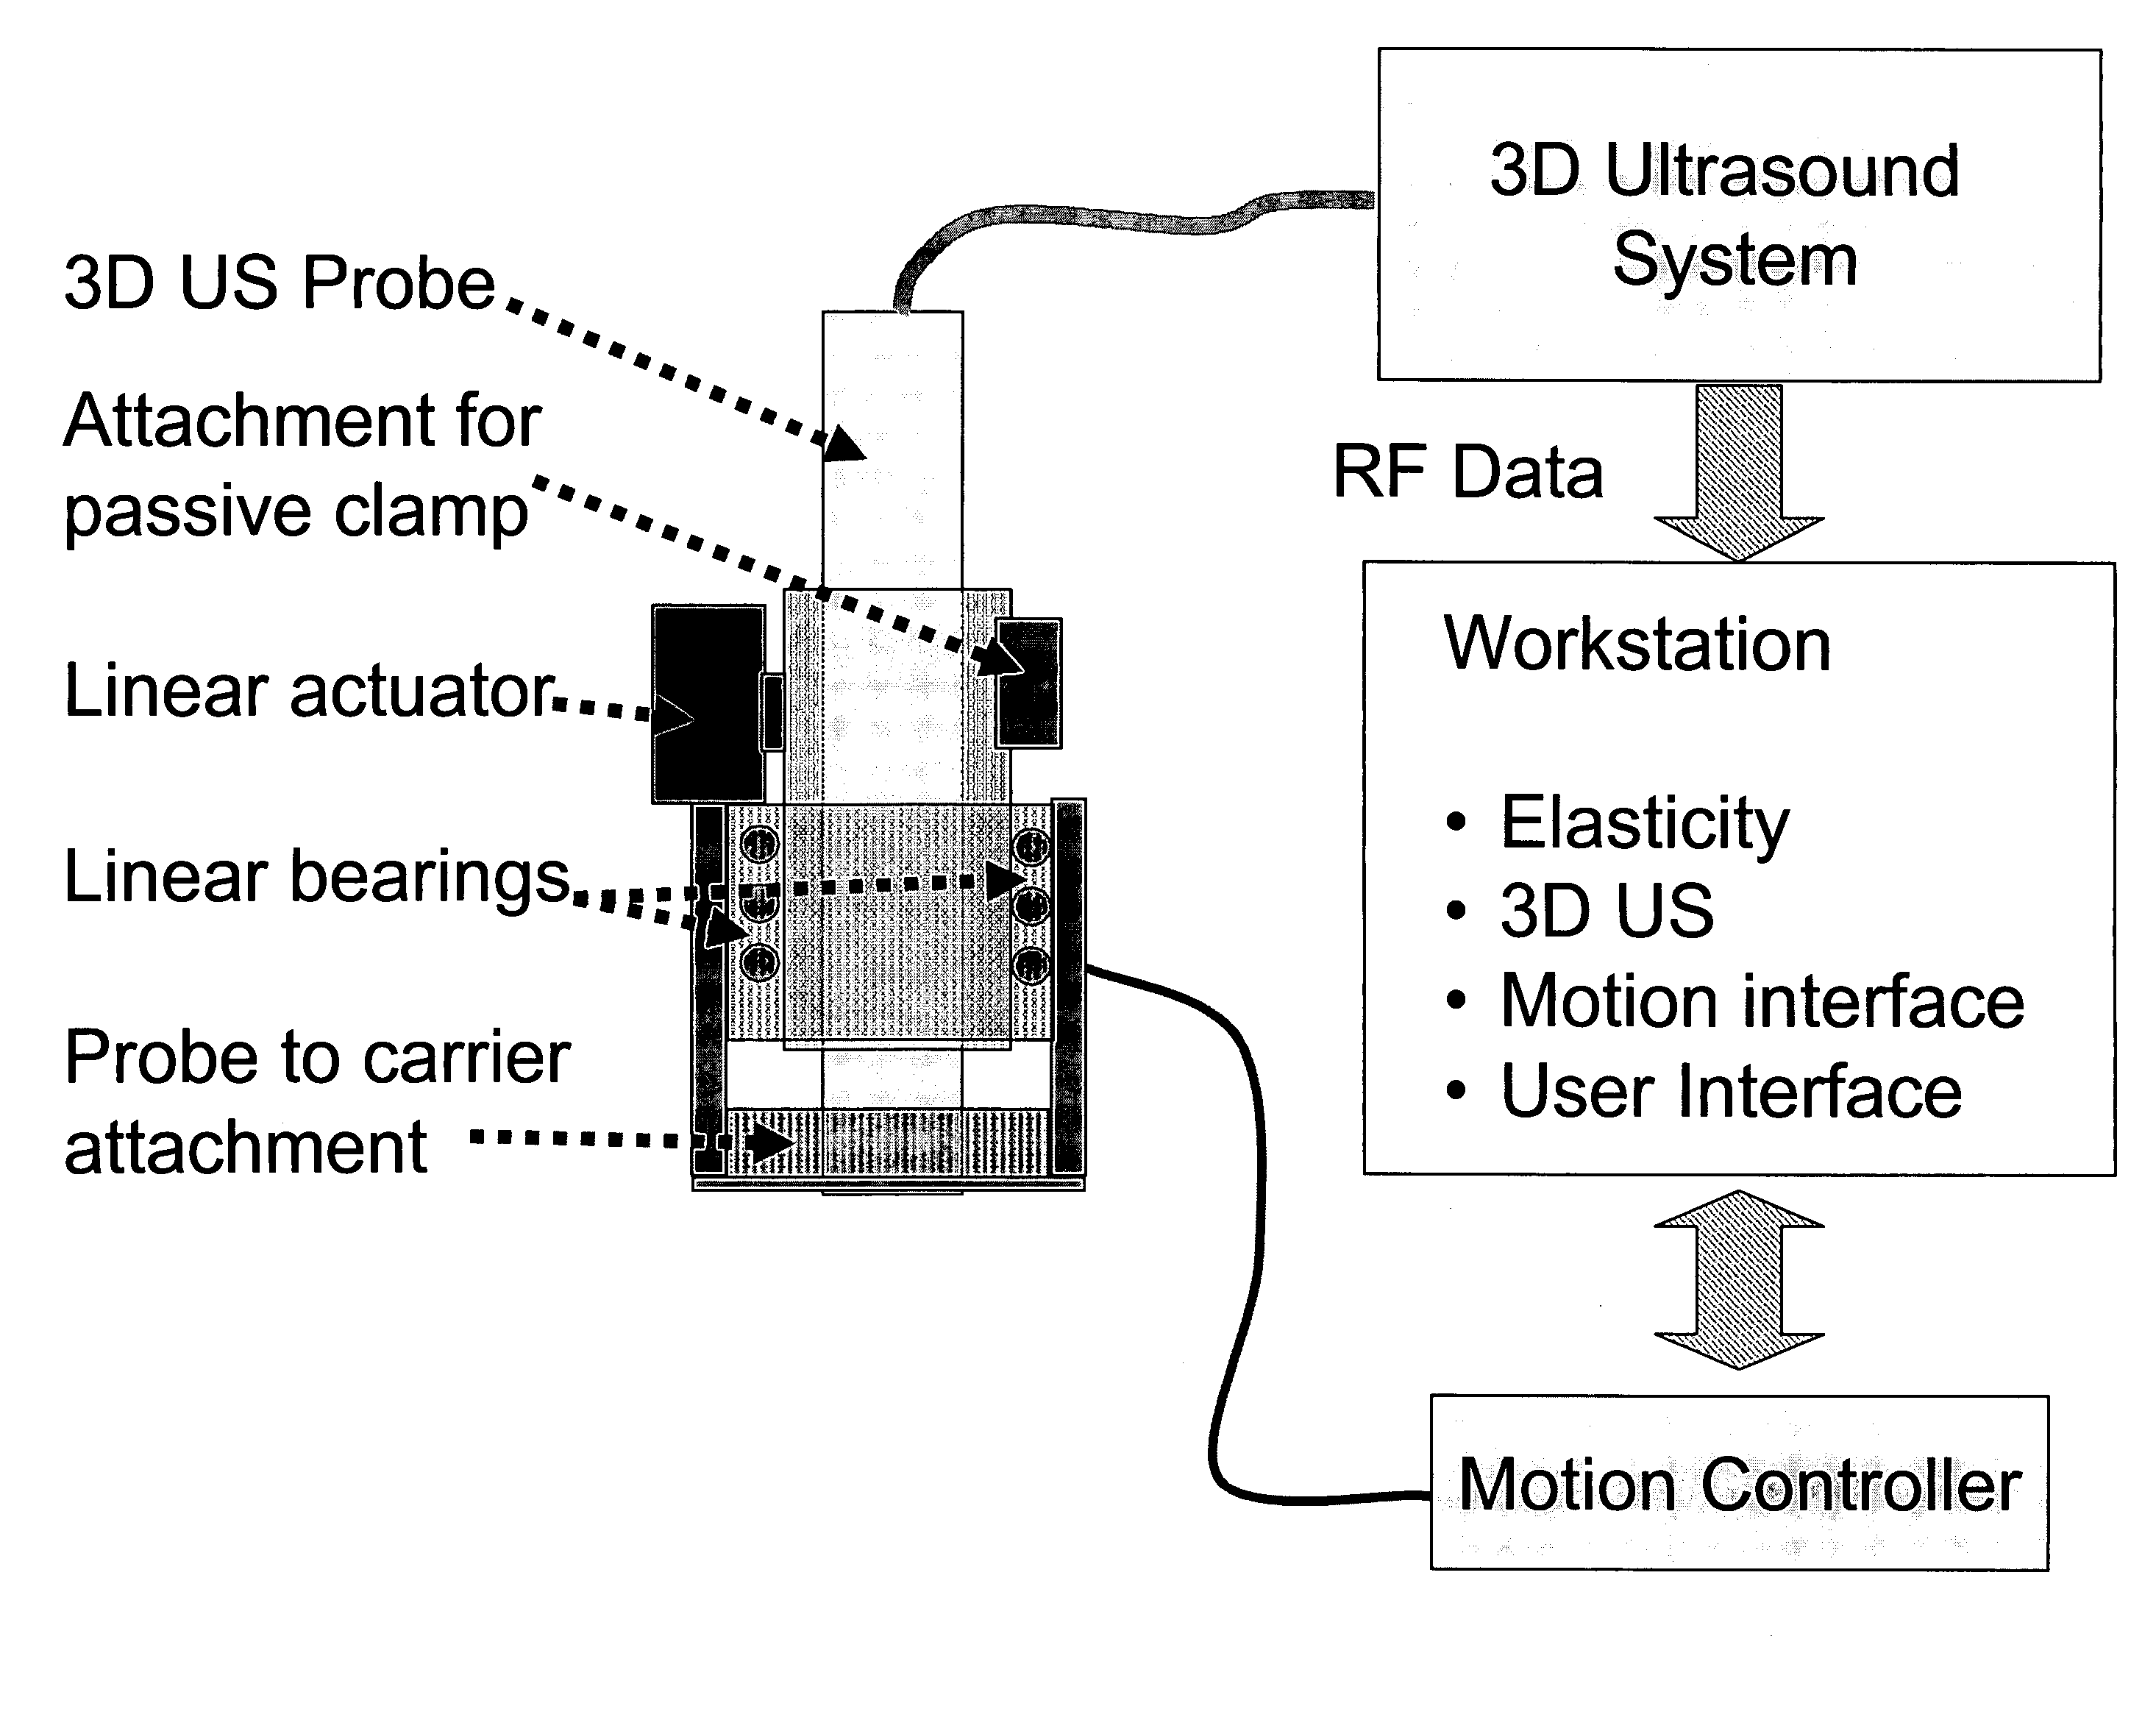 Robotic 5-dimensional ultrasound